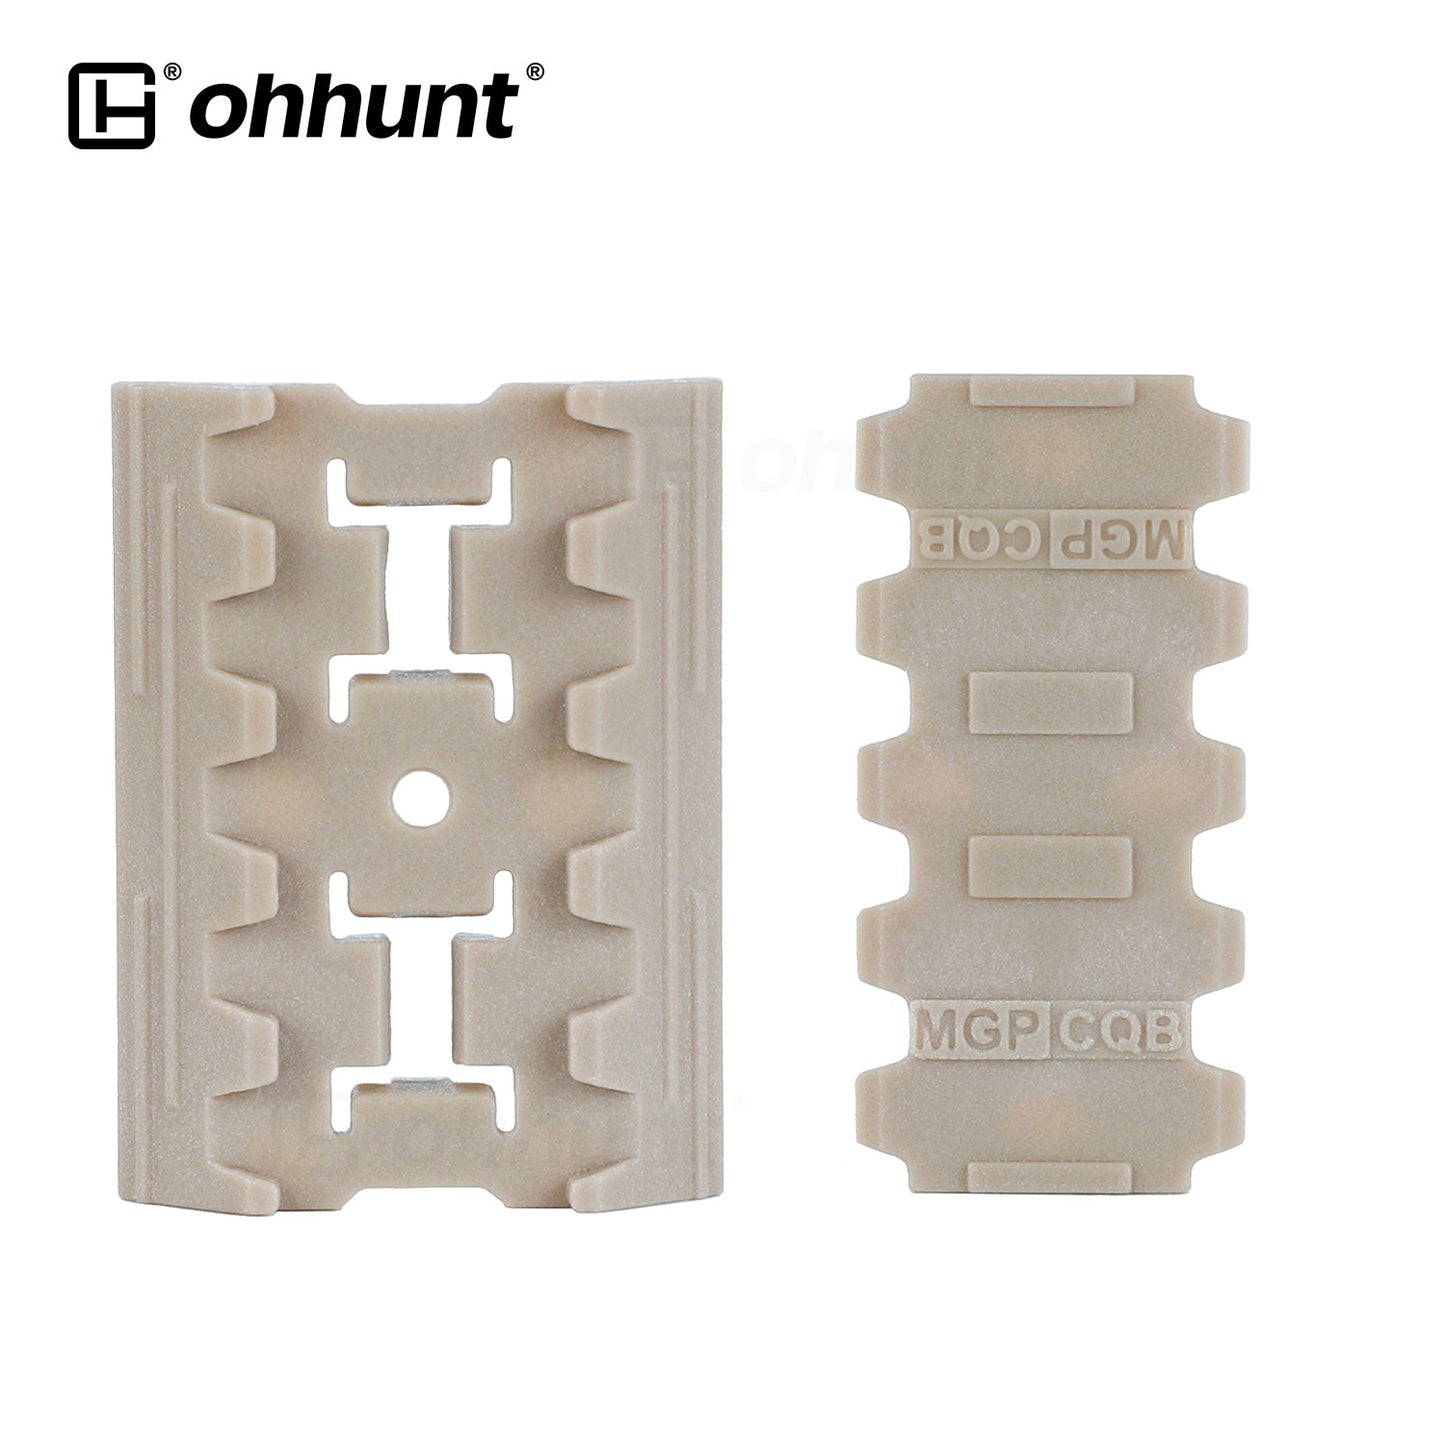 ohhunt® Armour M-LOK Rail Covers Set Polymer Handguard Panel - Tan, Pack of 12